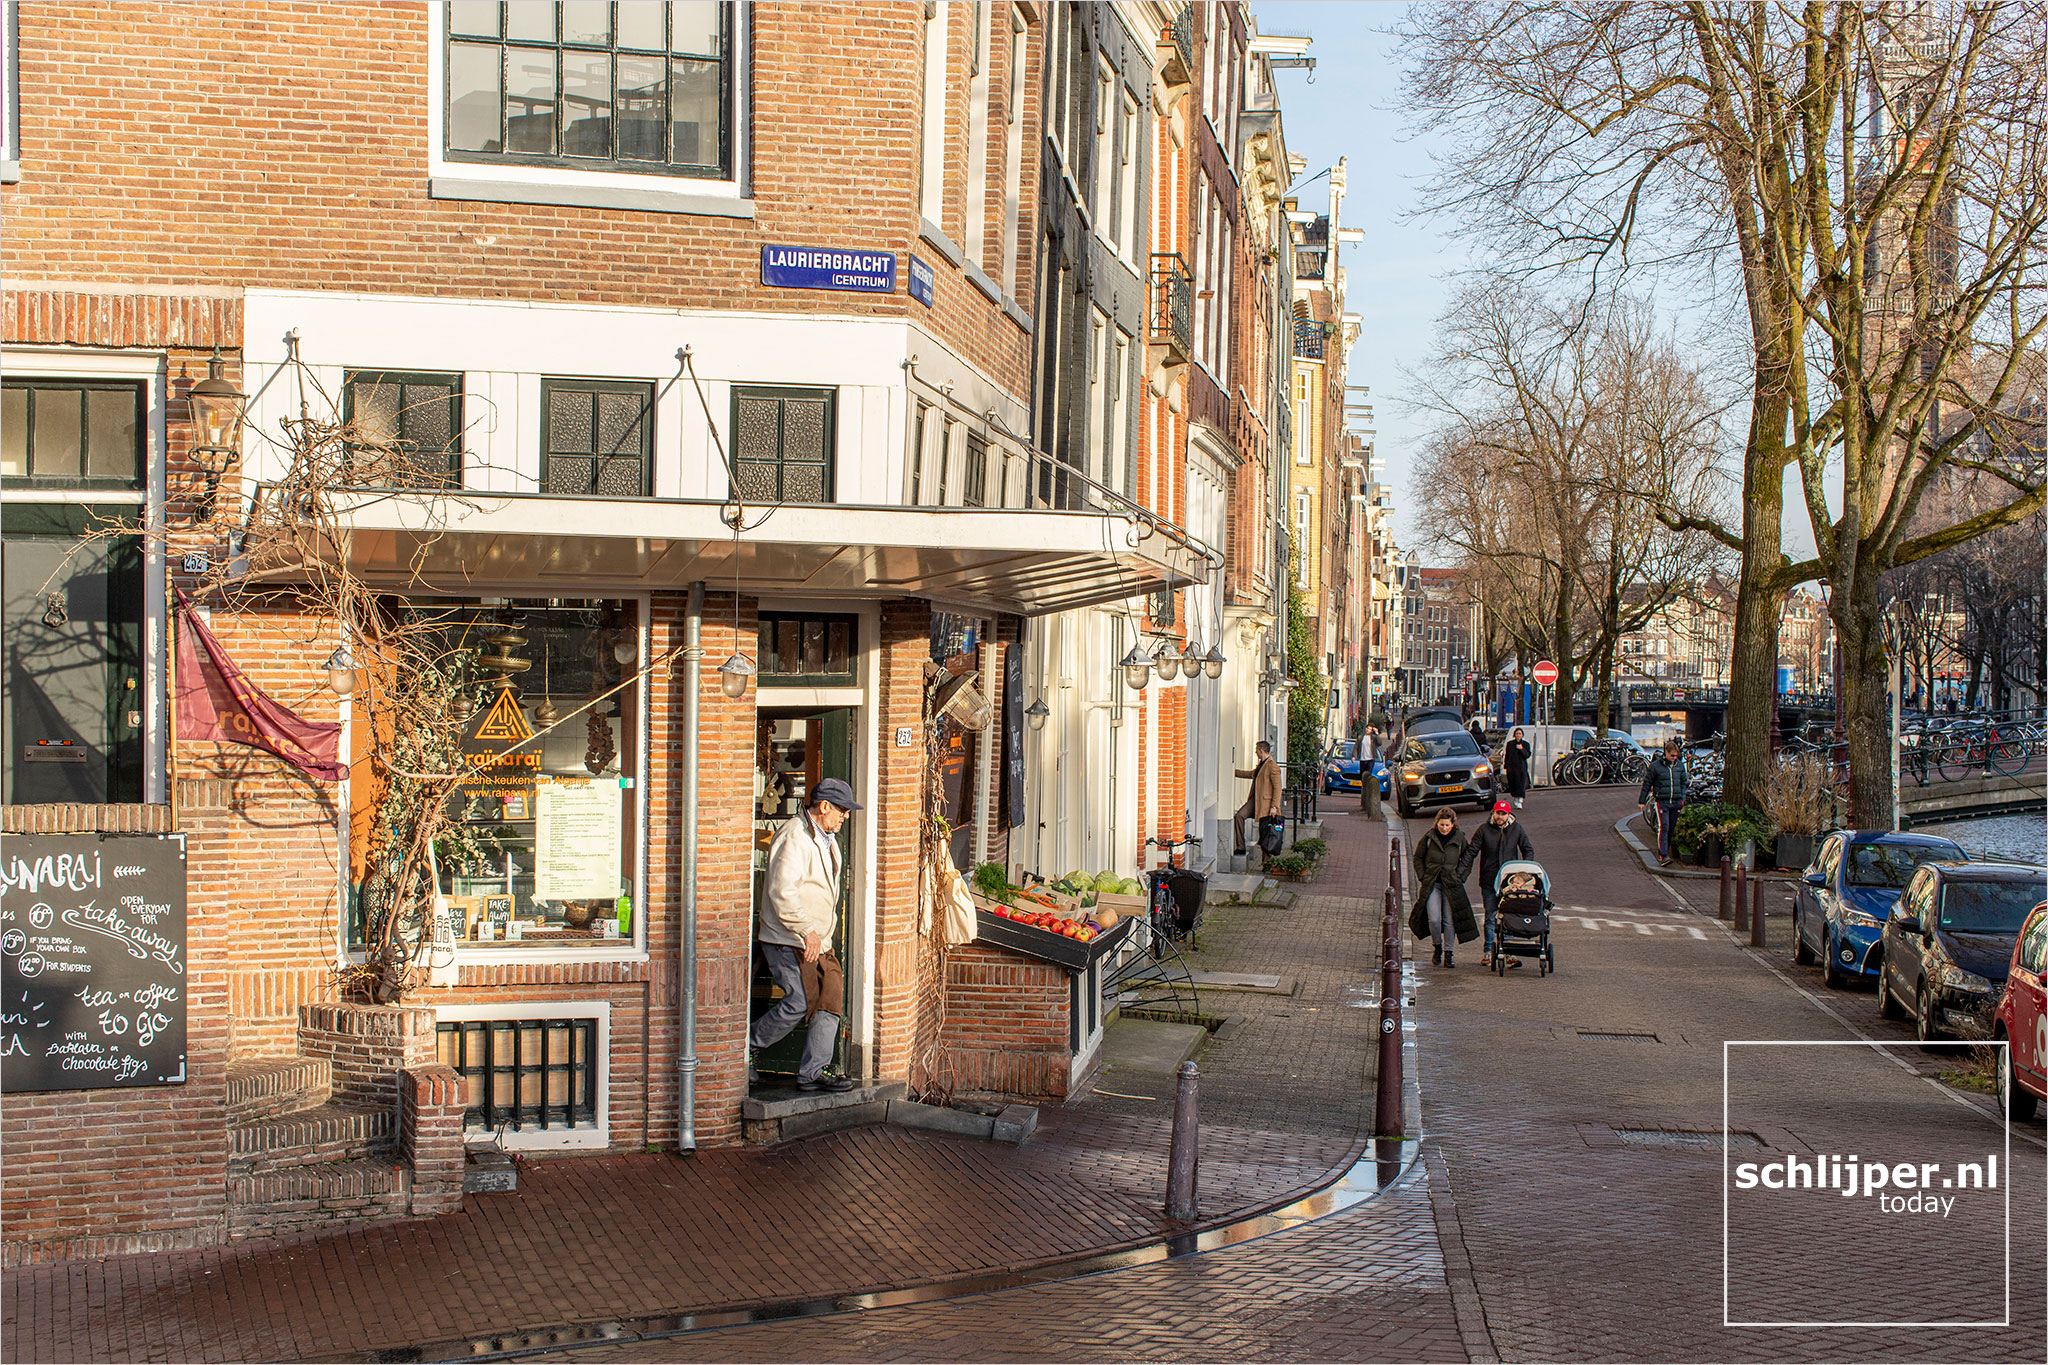 The Netherlands, Amsterdam, 20 februari 2021